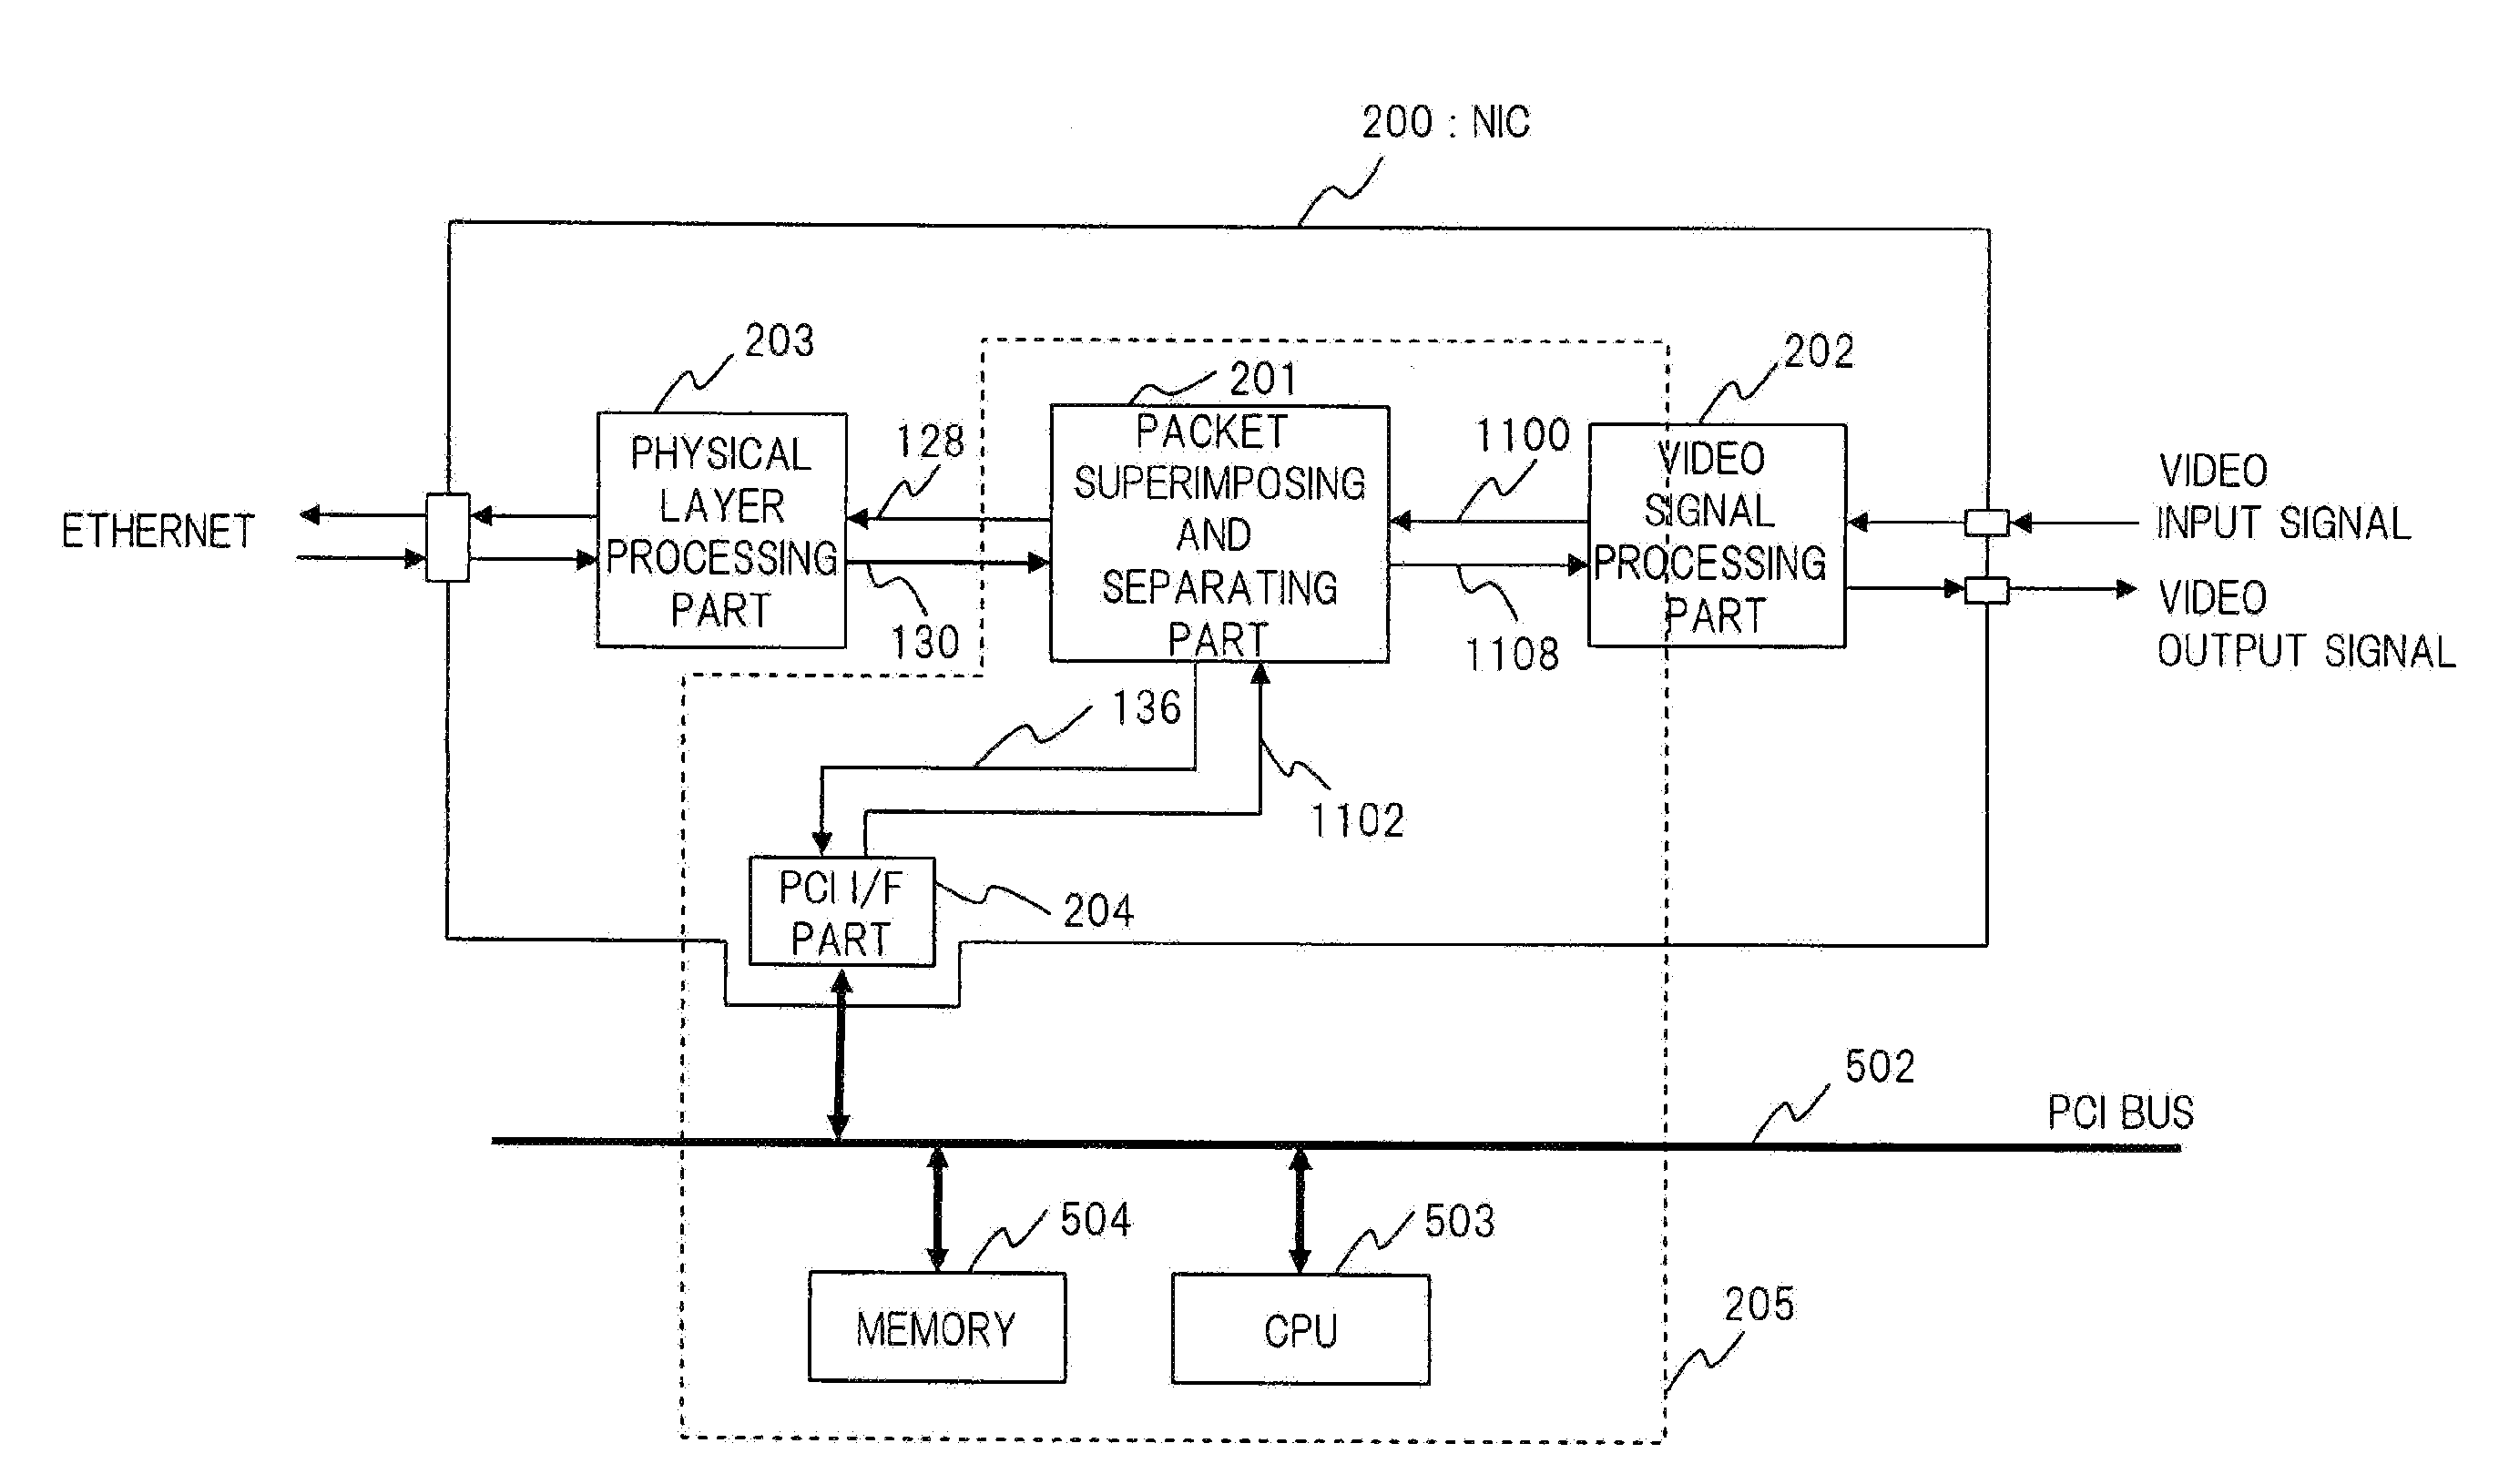 Transmission apparatus and transmission method